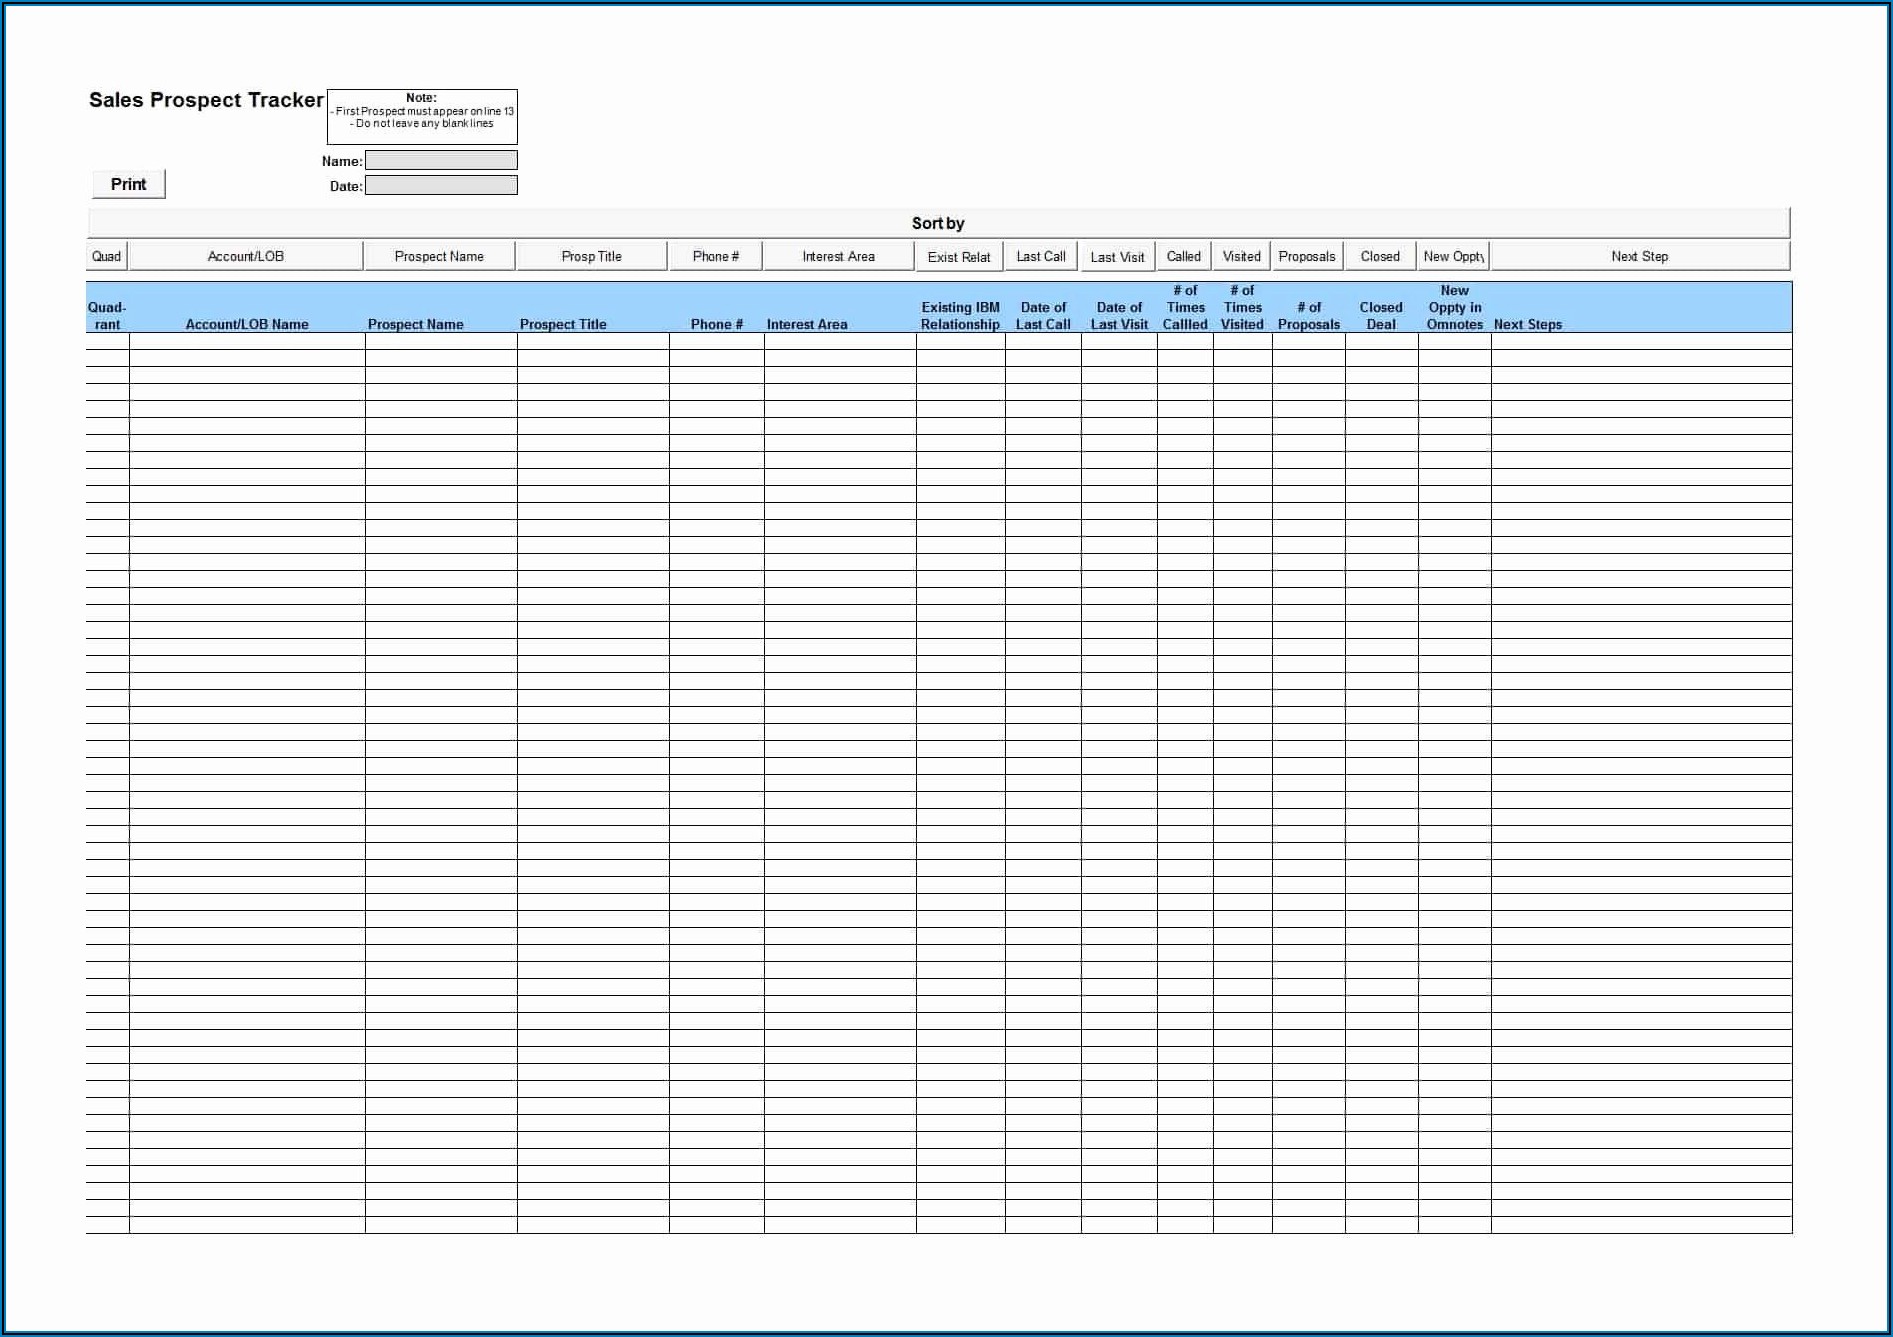 Sales Plan Template Excel